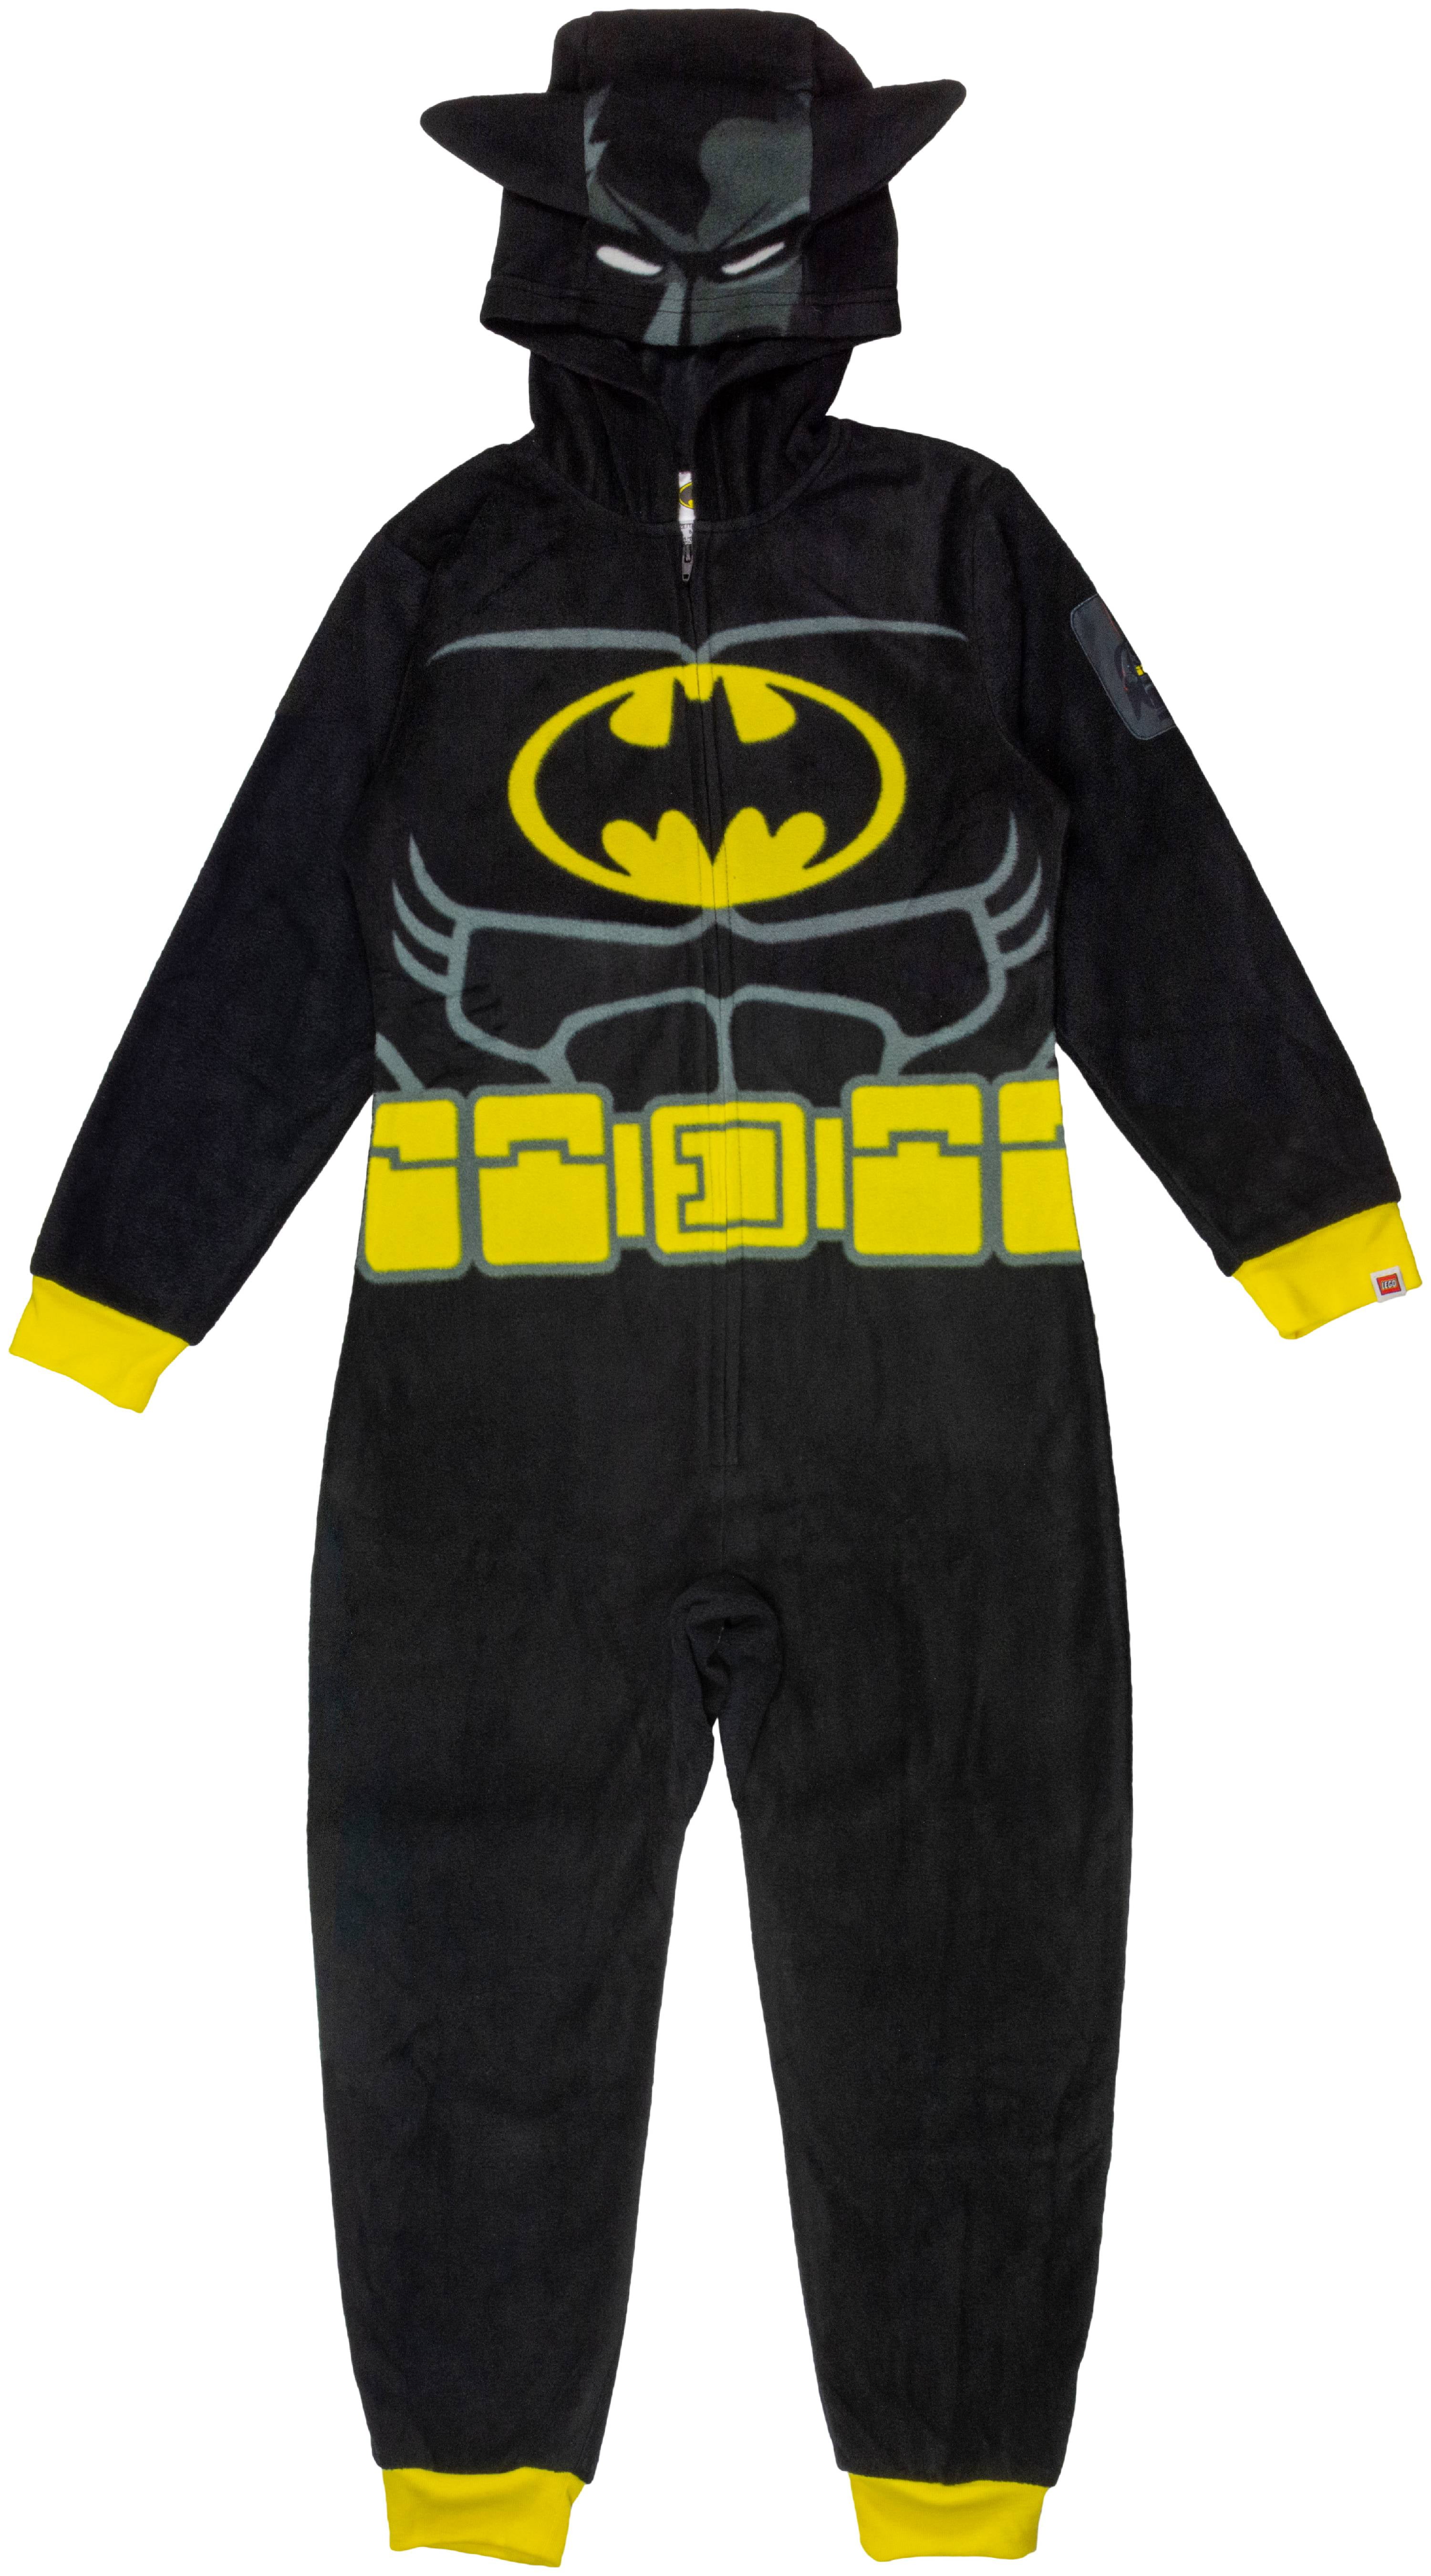 picnic Stejl ganske enkelt Lego Batman Boys One Piece Hooded Costume Union Suit Pajama, Sizes 4-12 -  Walmart.com